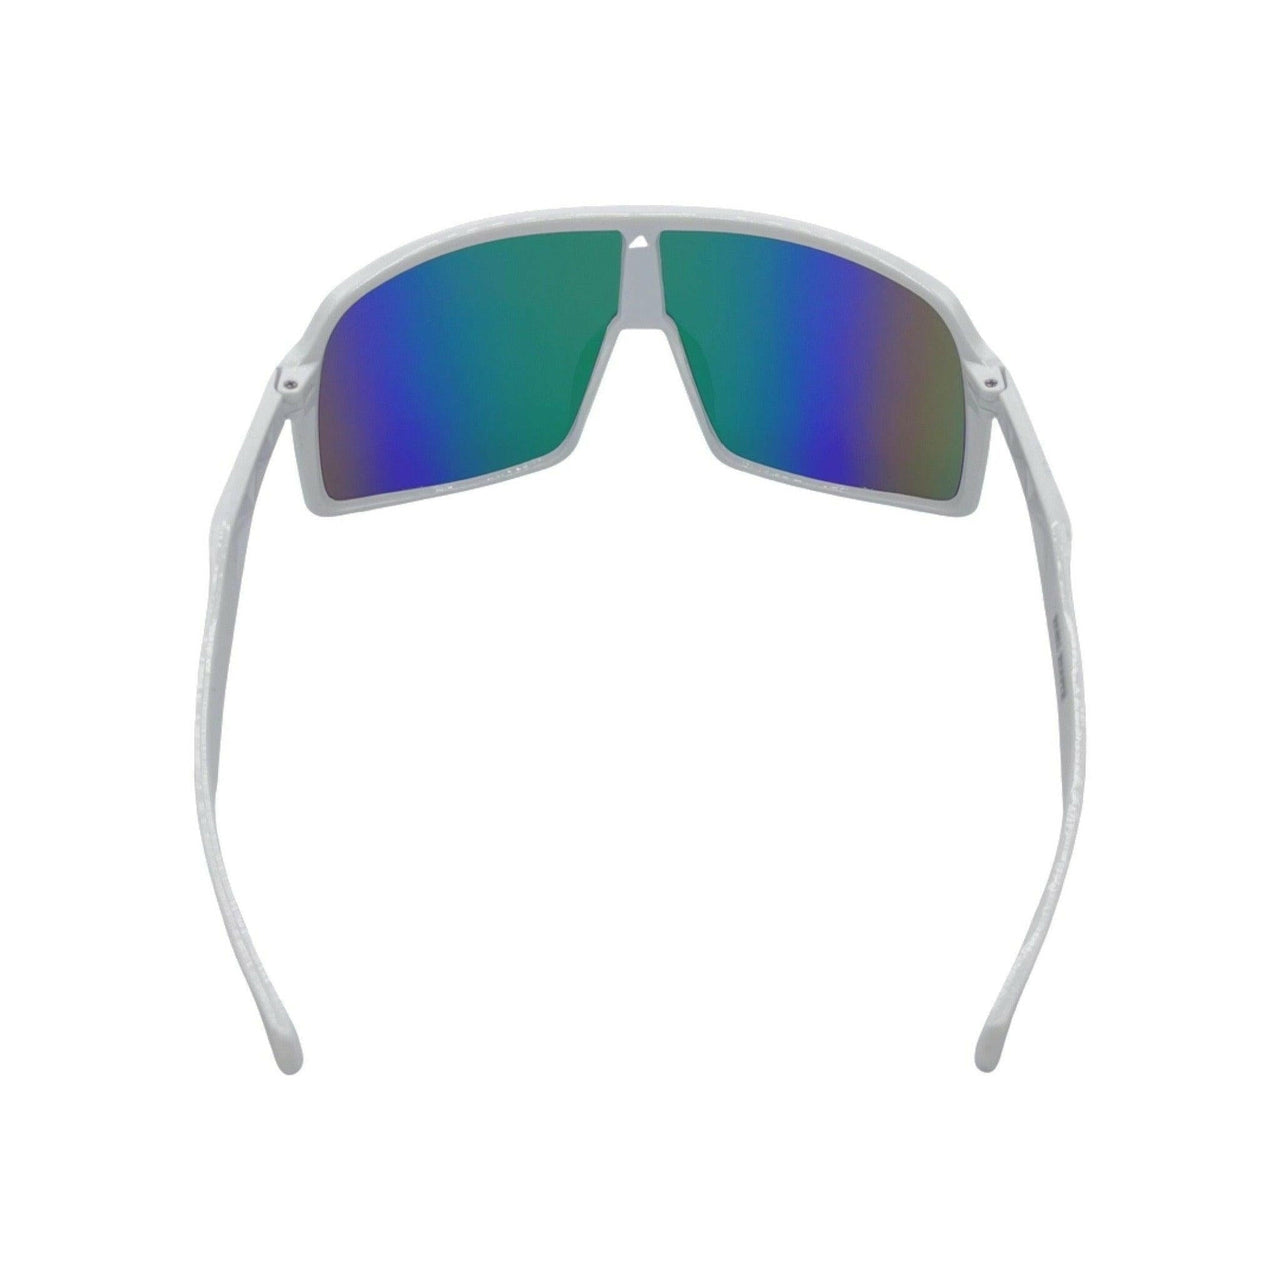 Yeti White & Pink Polarized Lens Sunglasses - Rebel Reaper Clothing CompanySunglasses